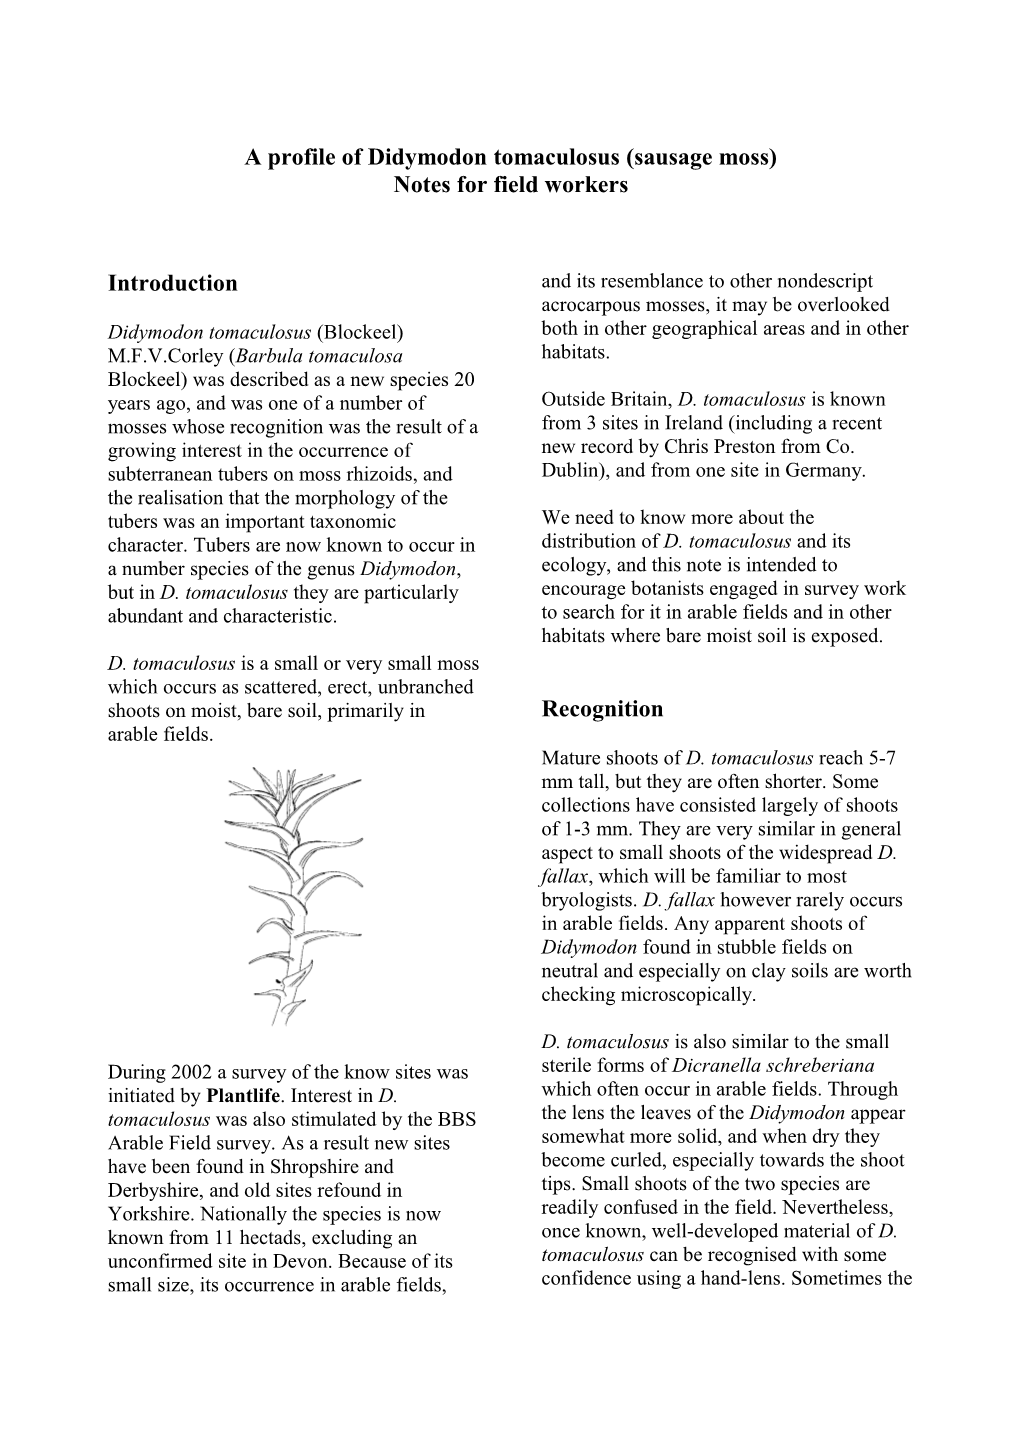 A Profile of Didymodon Tomaculosus (Sausage Moss)